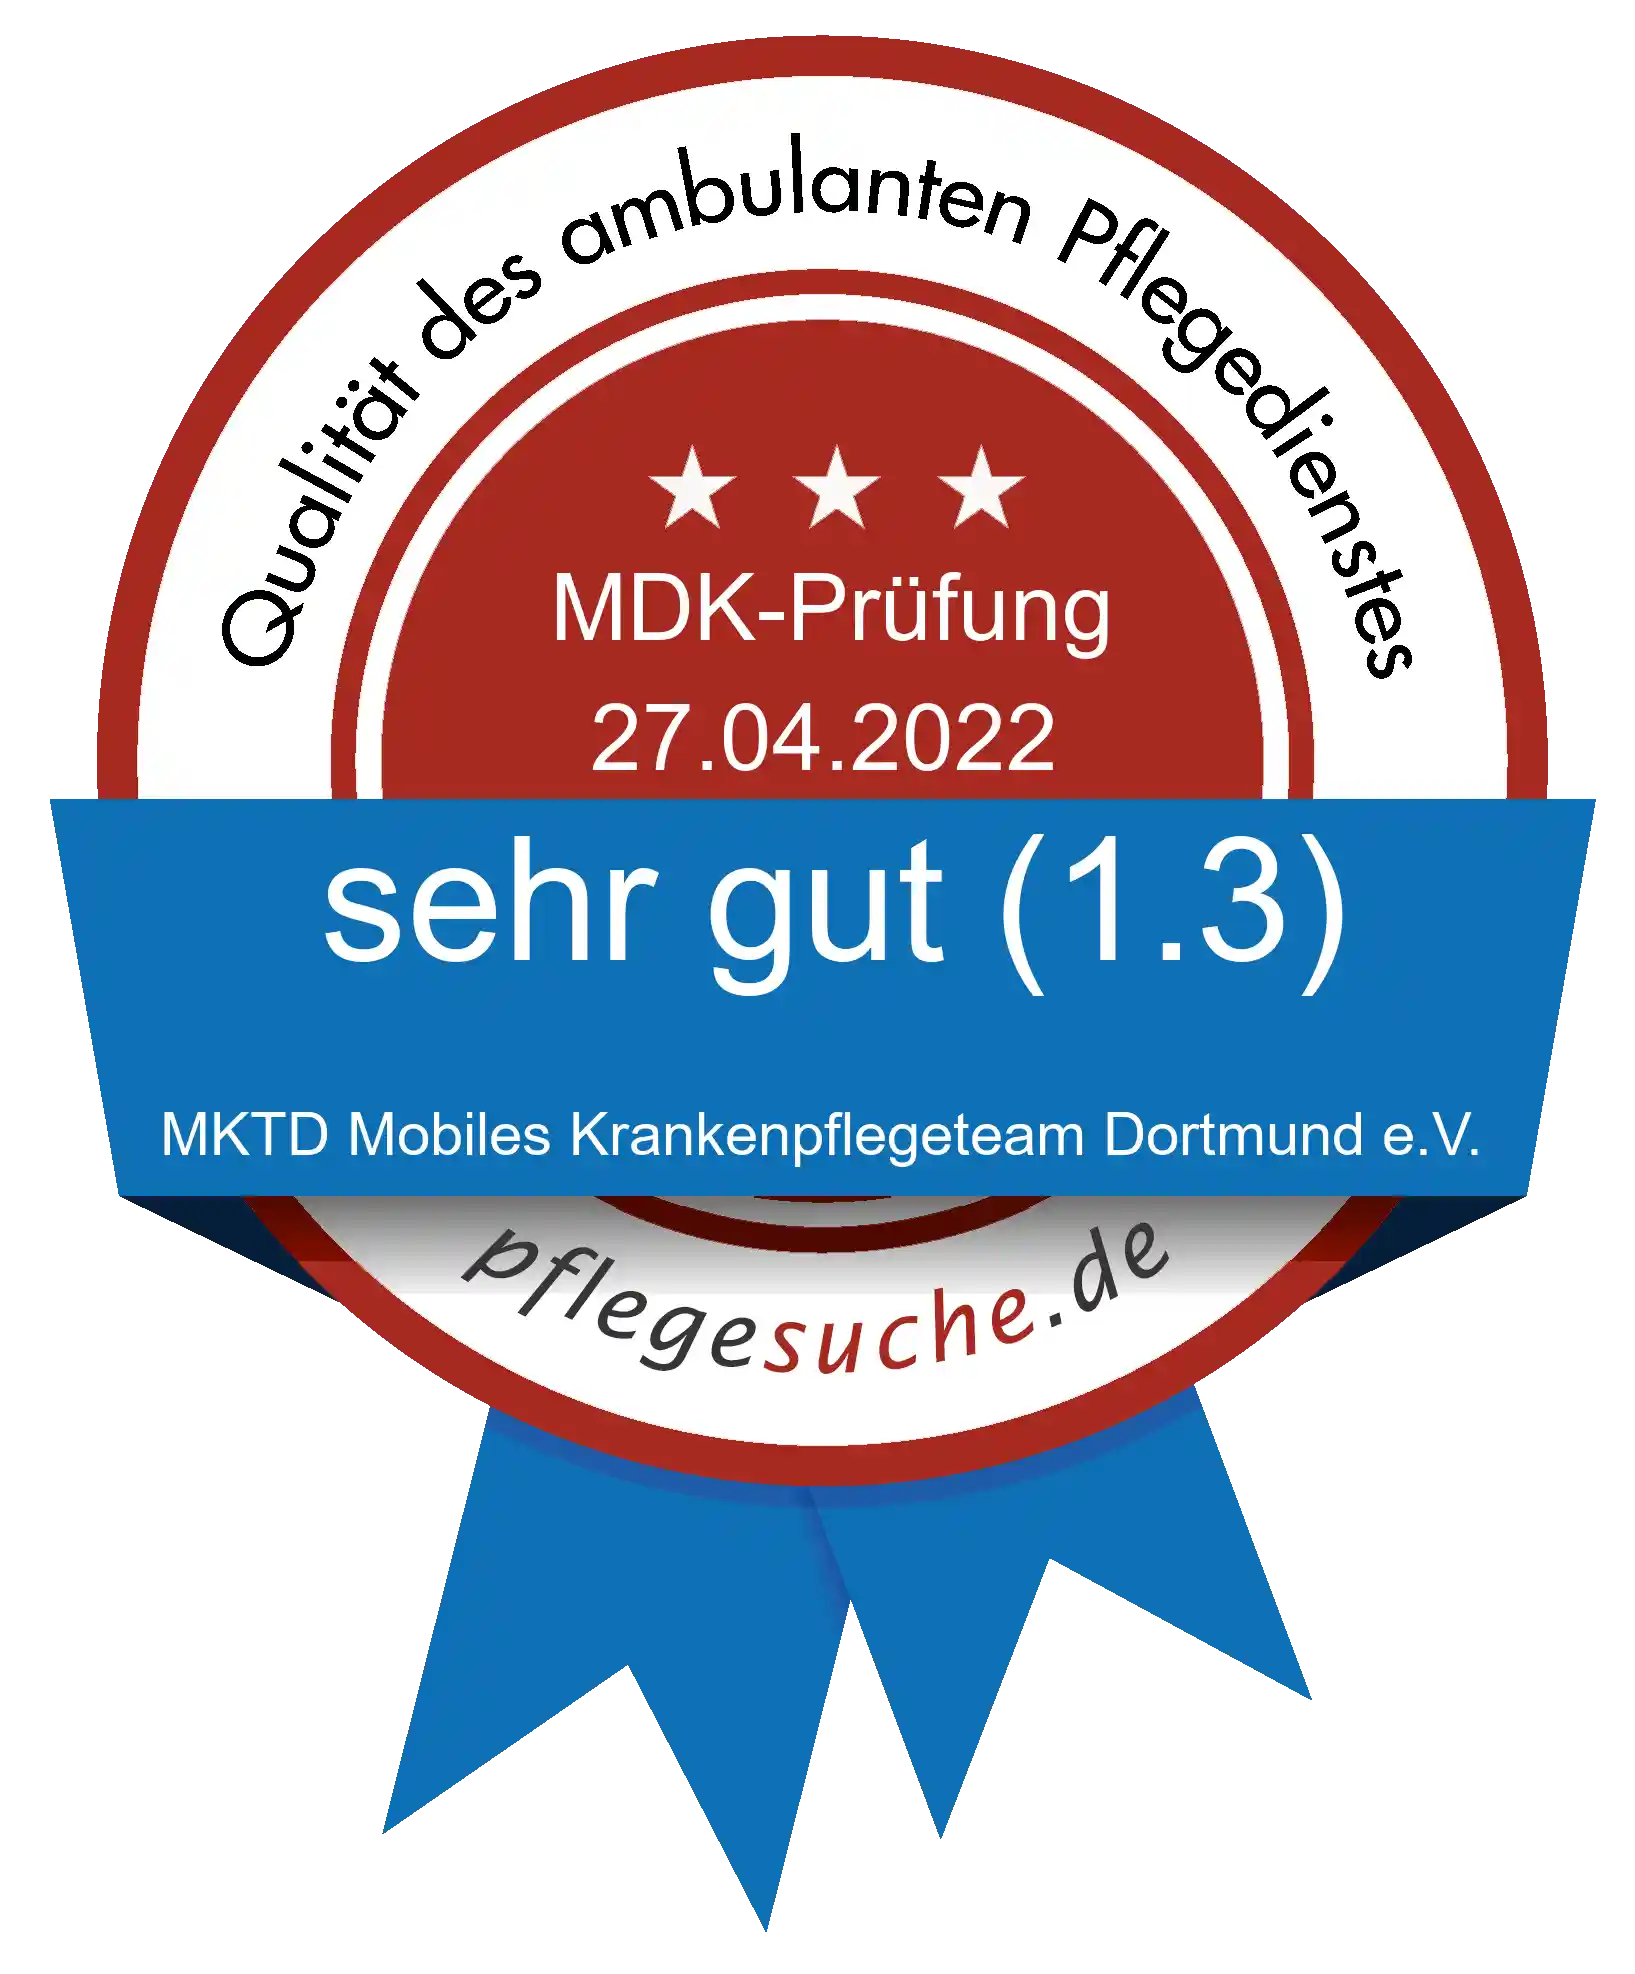 Siegel Benotung: MKTD Mobiles Krankenpflegeteam Dortmund e.V.